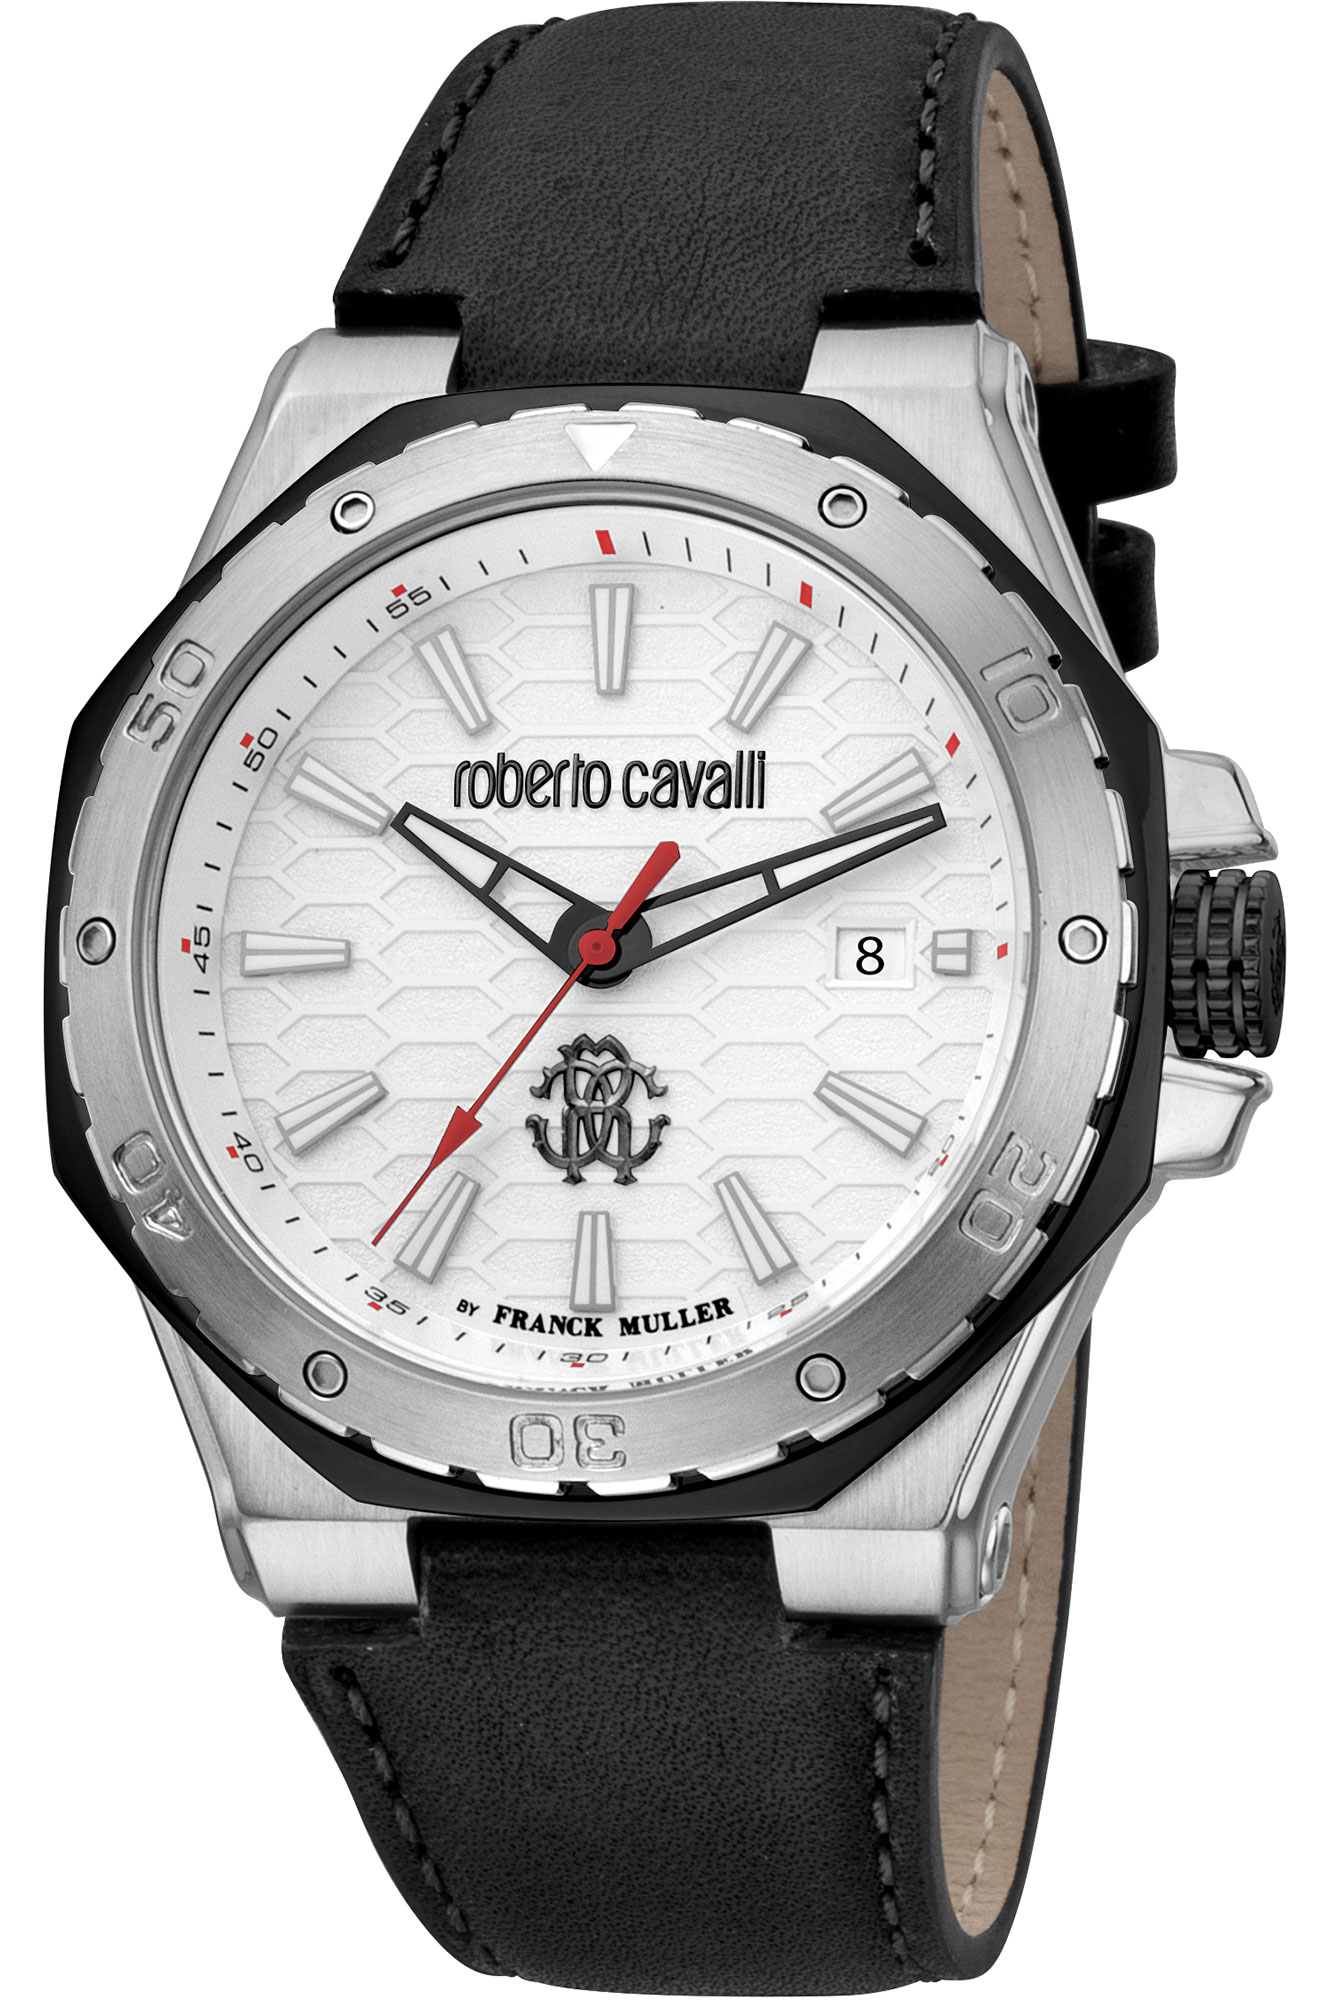 Watch Roberto Cavalli by Franck Muller rv1g122l0011